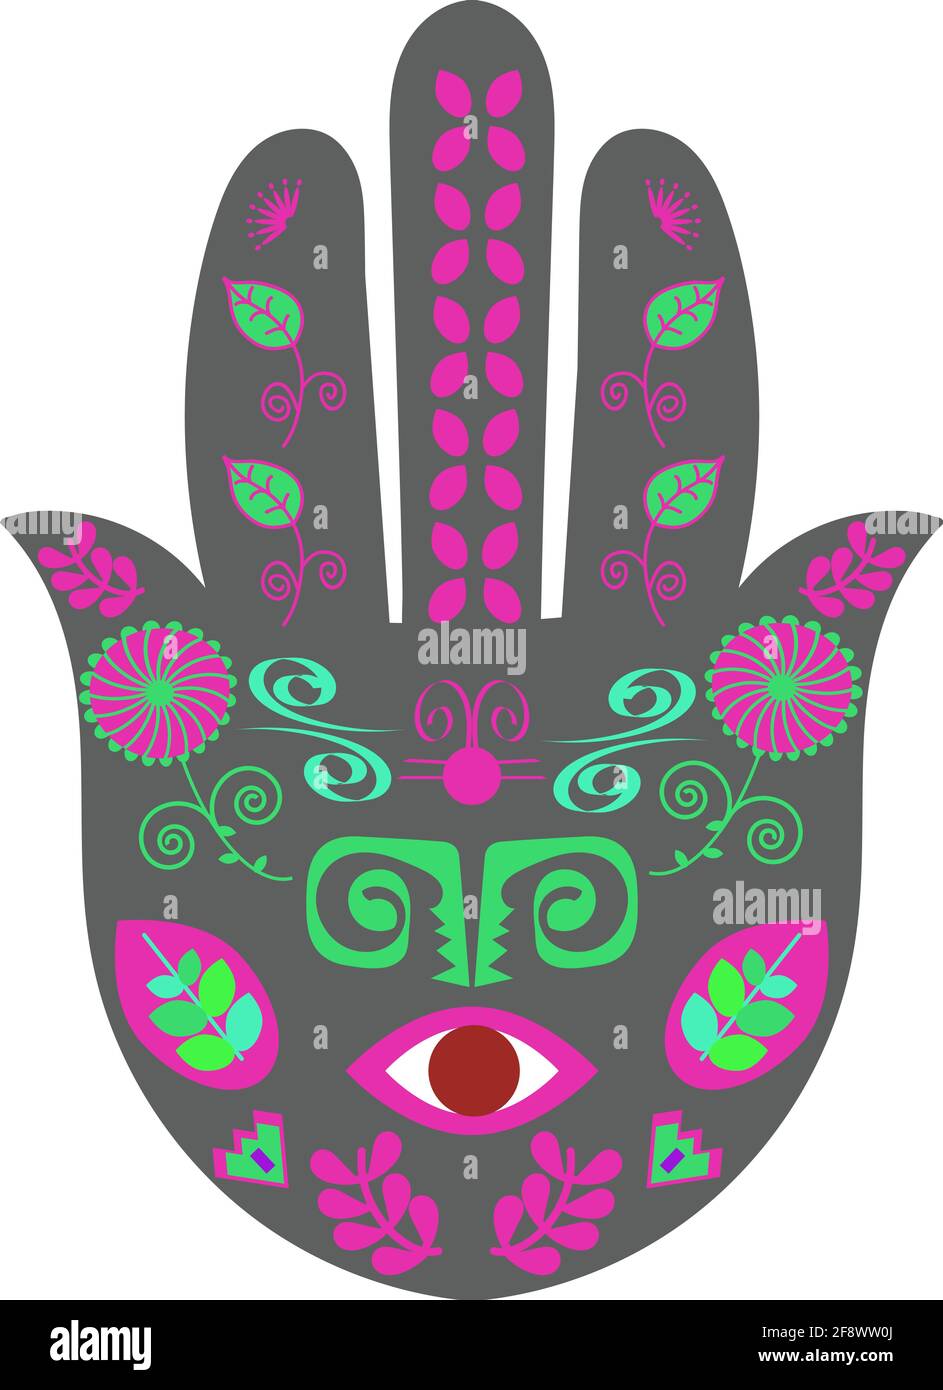 Hamsa hand art, evil eye protection, arabic amulet image Stock Photo